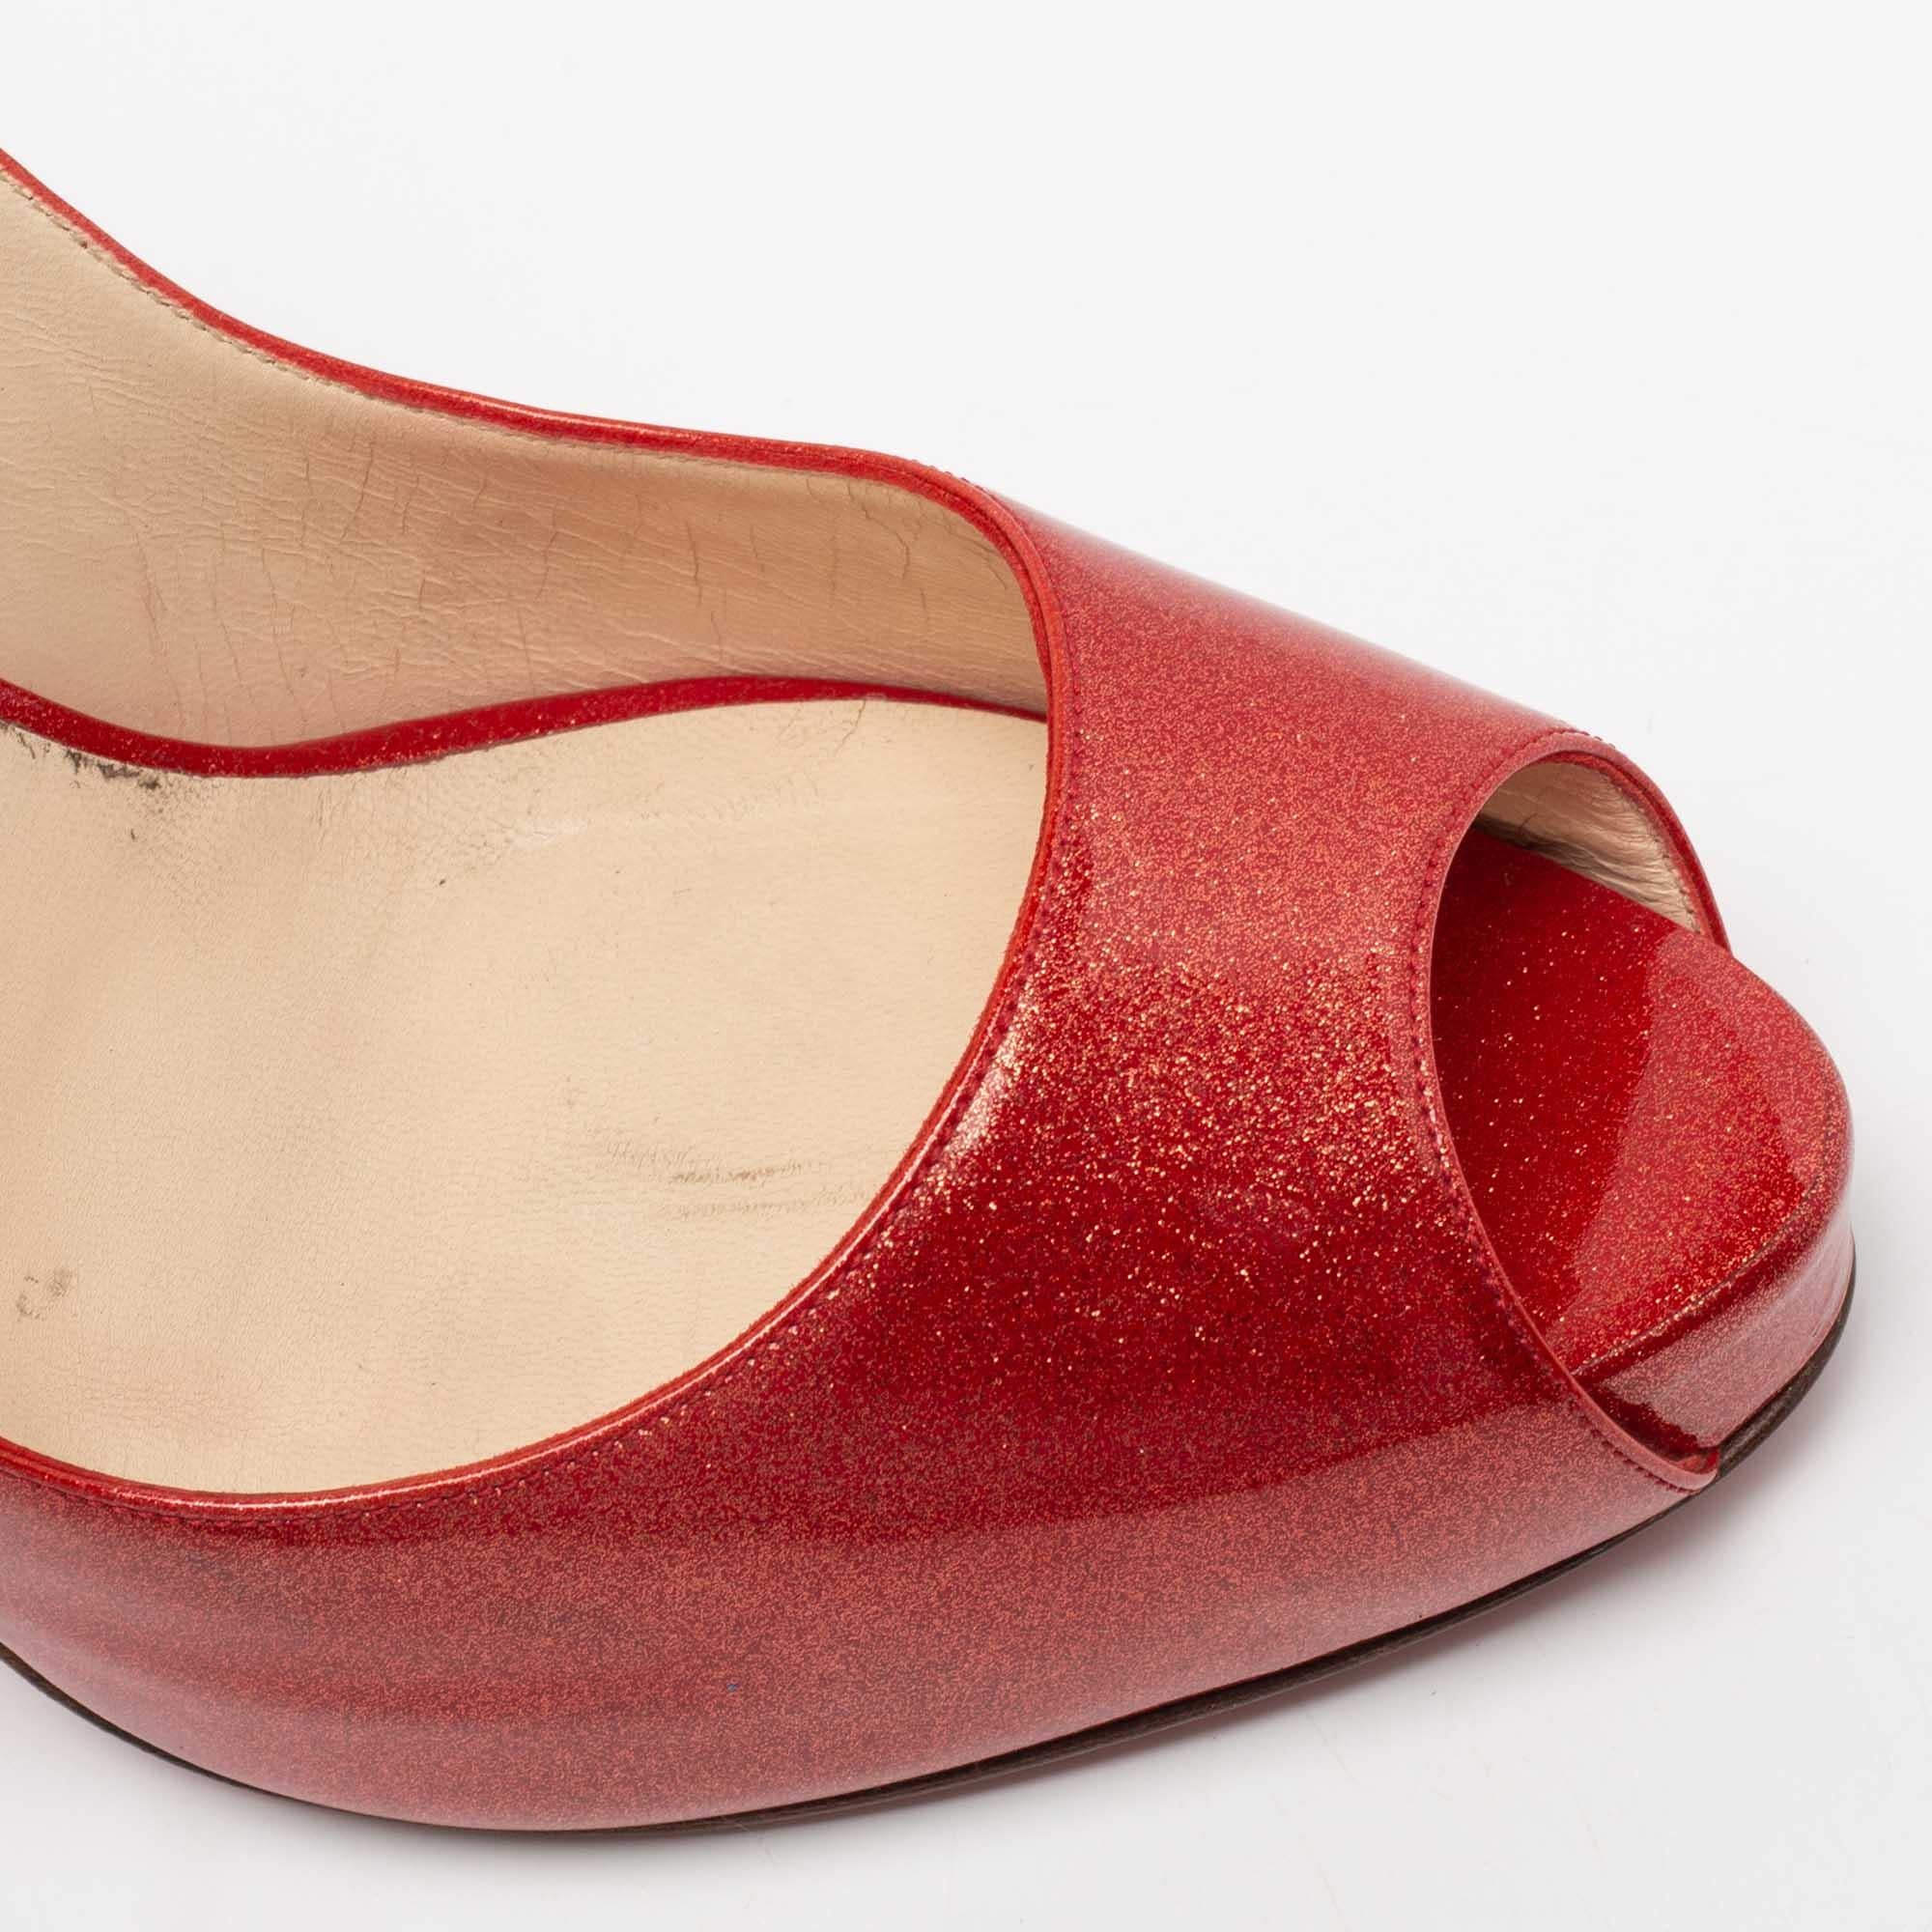 Women's Christian Louboutin Glitter Patent Leather No Prive Slingback Sandals Size 41